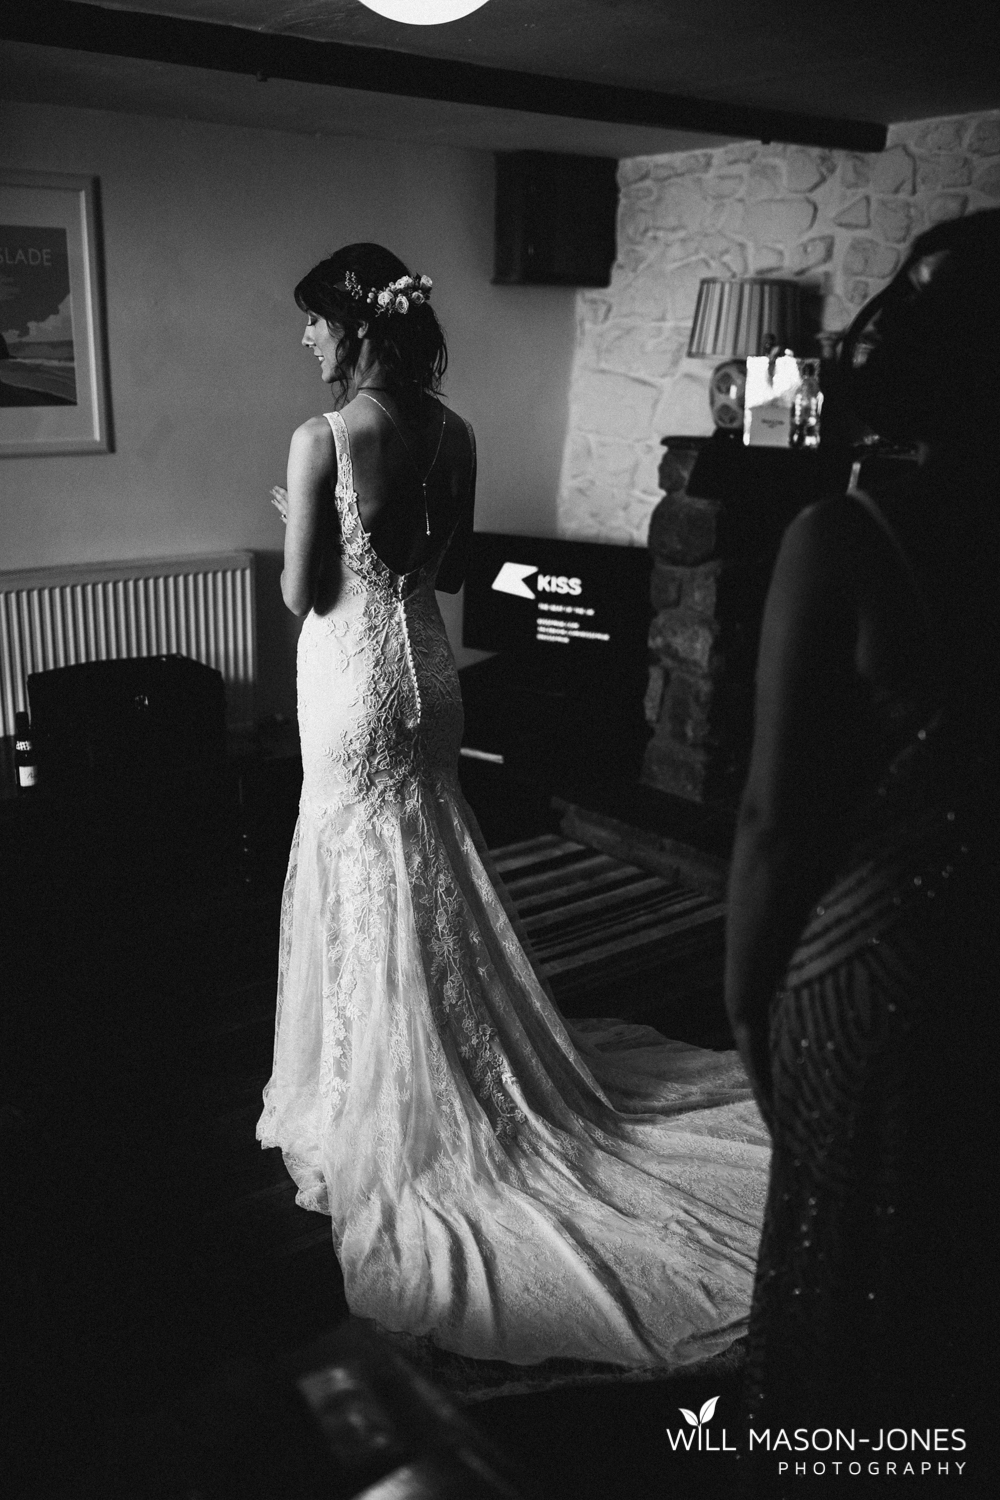  The king arthur hotel swansea wedding bridal preparations photography cottage bridesmaids 